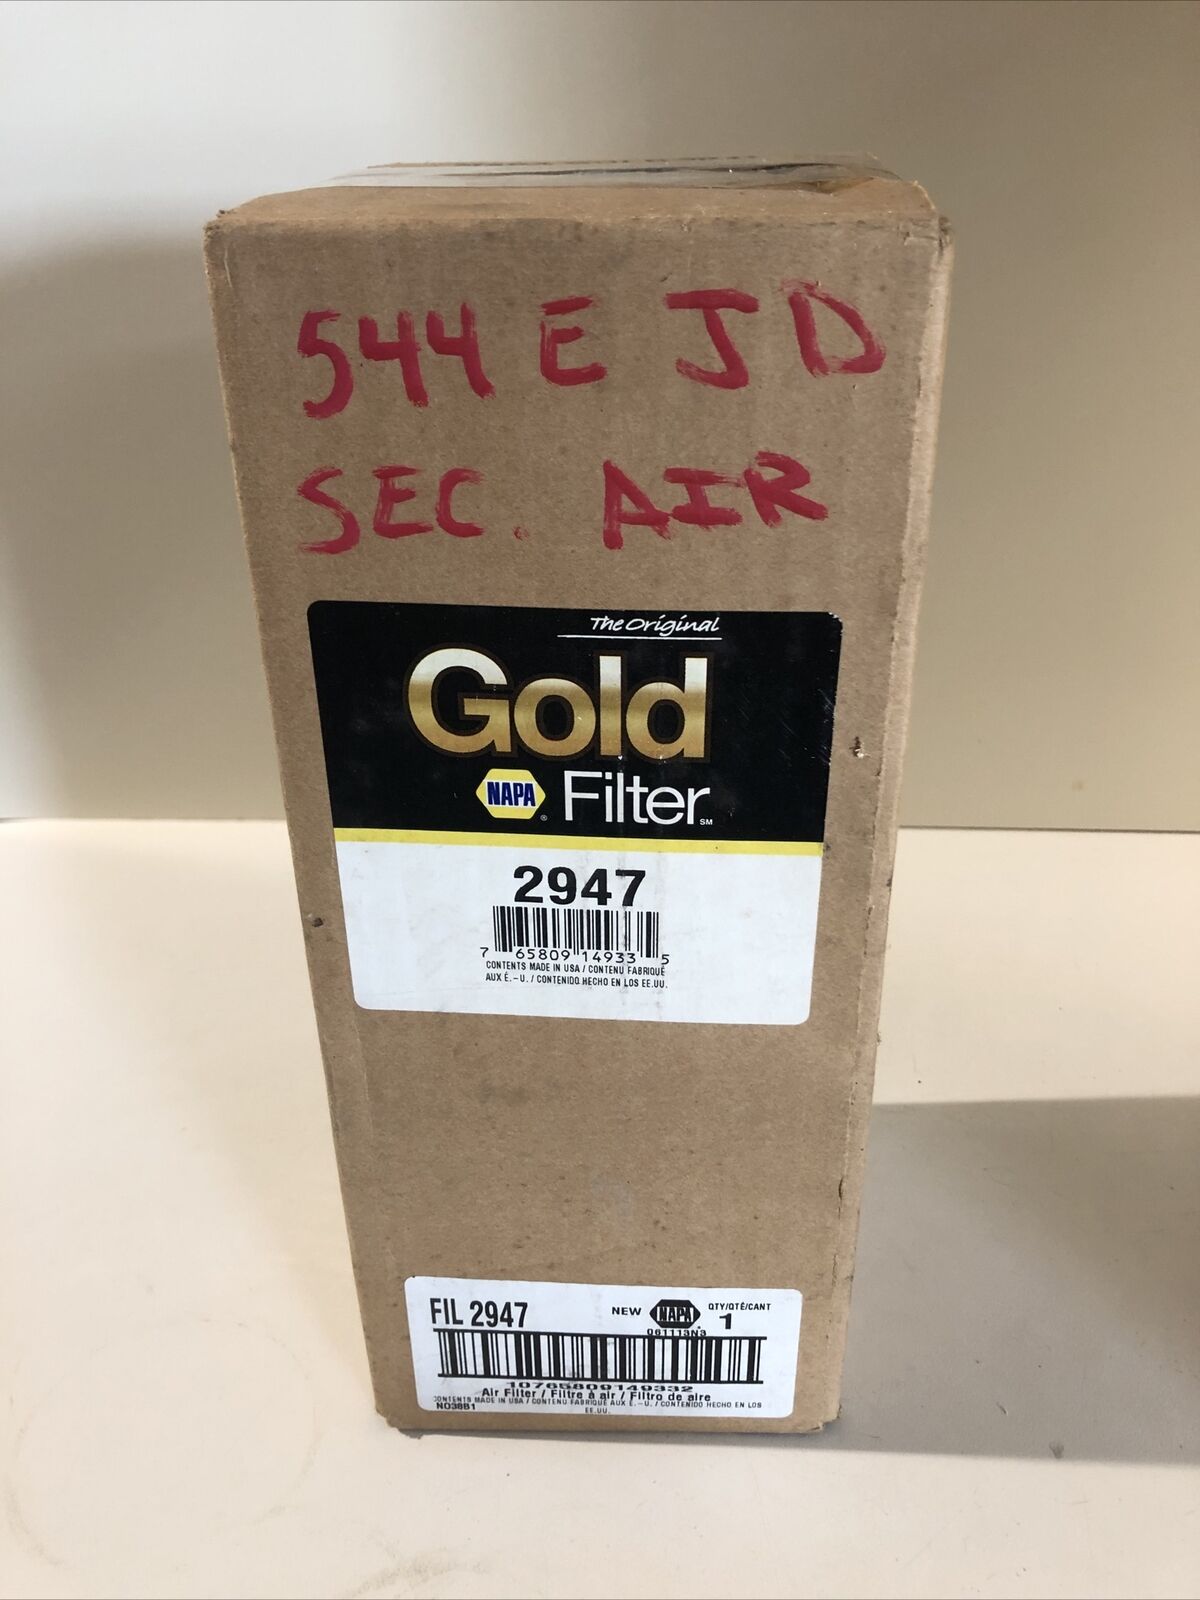 John Deere 544E Secondary Air Filter.  2947 Napa Gold Air Filter